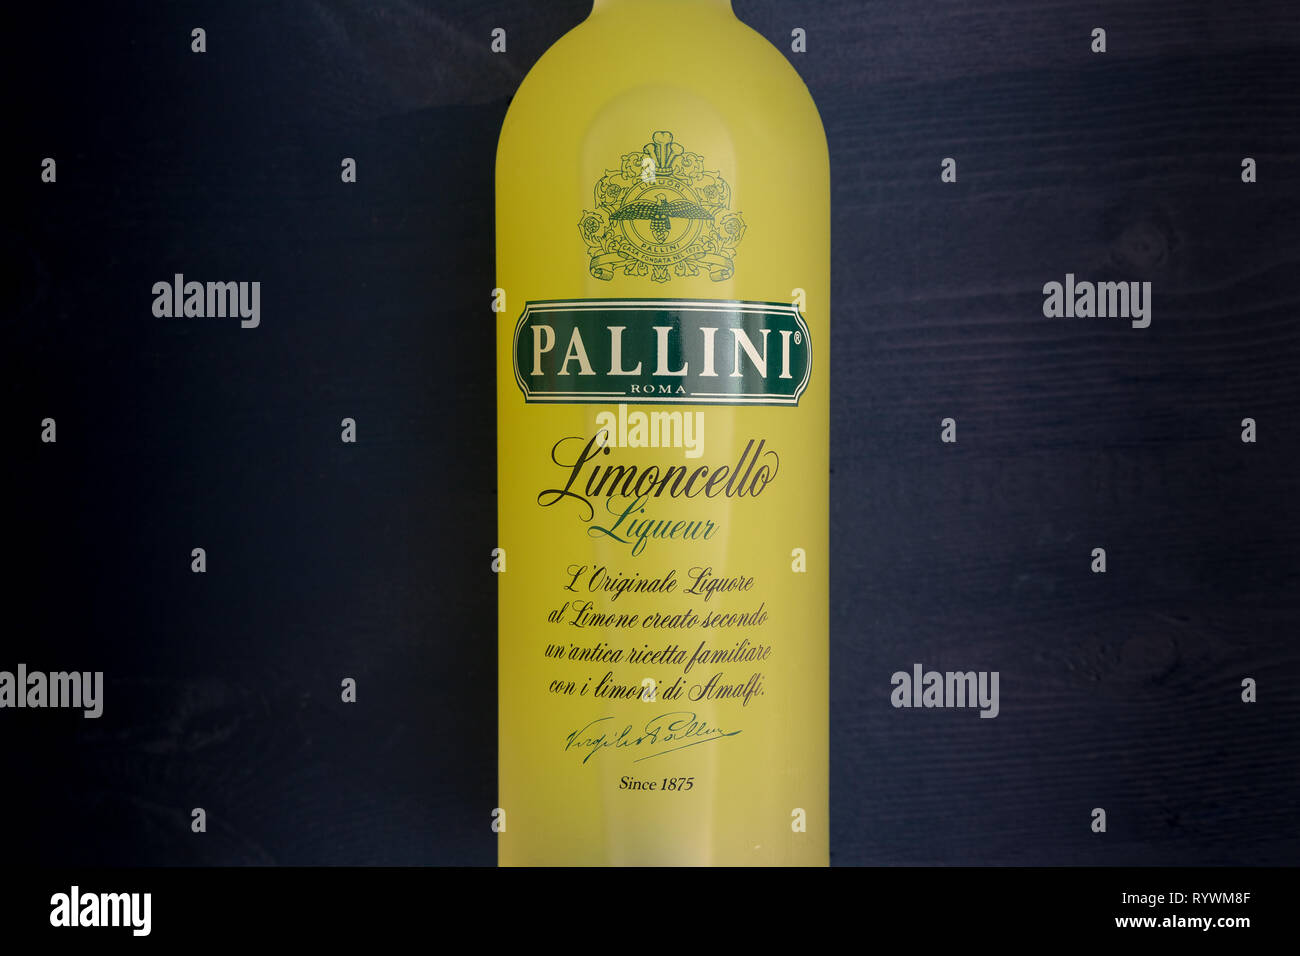 https://c8.alamy.com/comp/RYWM8F/london-march-13-2019-pallini-limoncello-lemon-liqueur-in-yellow-glass-bottle-on-dark-background-RYWM8F.jpg